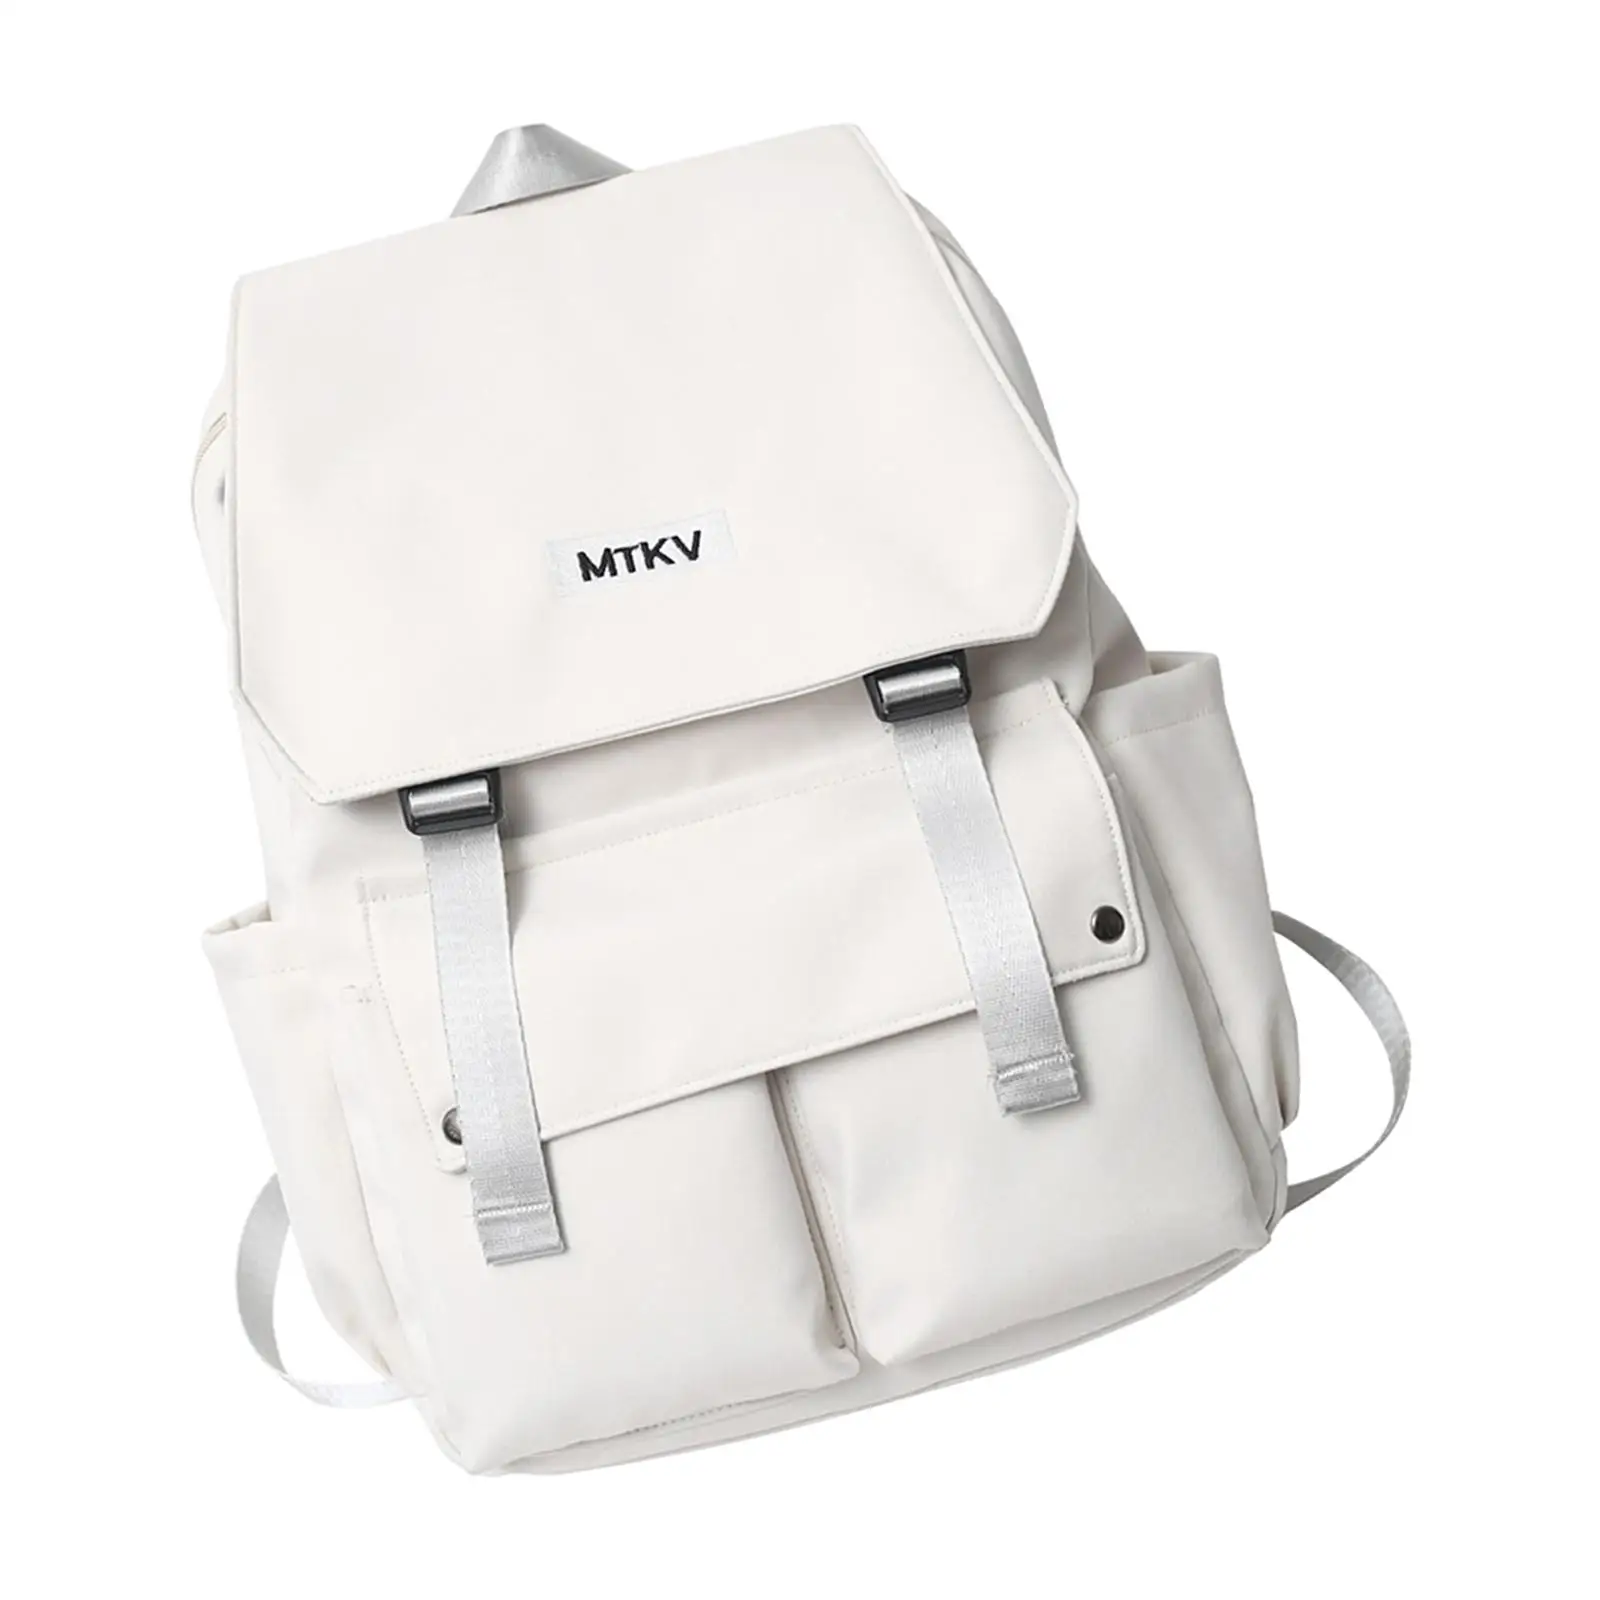 High School Backpack School Bag Large with Zipper Daypack Laptop Rucksack Travel Bag Bookbag for Students Teens Female College